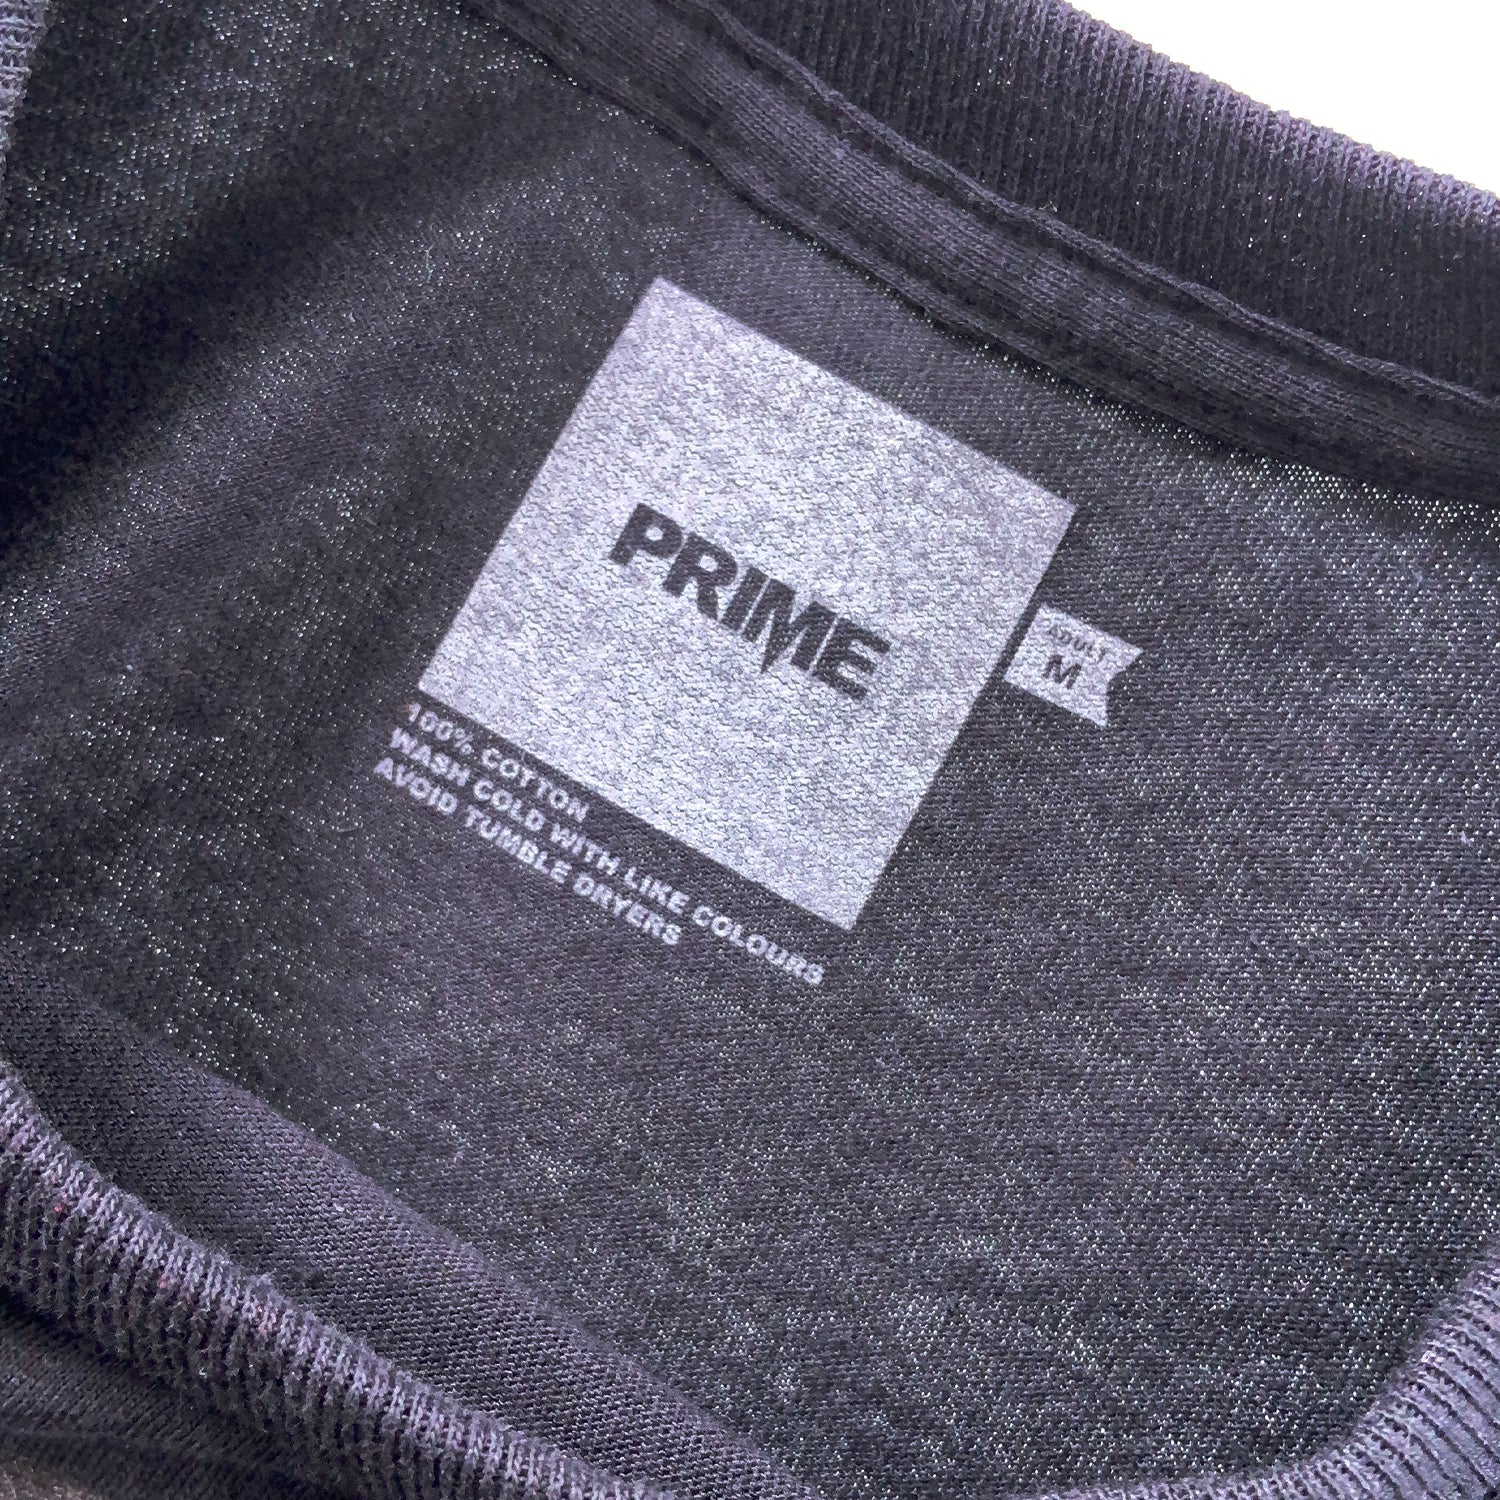 PRIME DELUX OG PREMIUM LONG SLEEVE T-SHIRT - BLACK / BLACK - Prime Delux Store